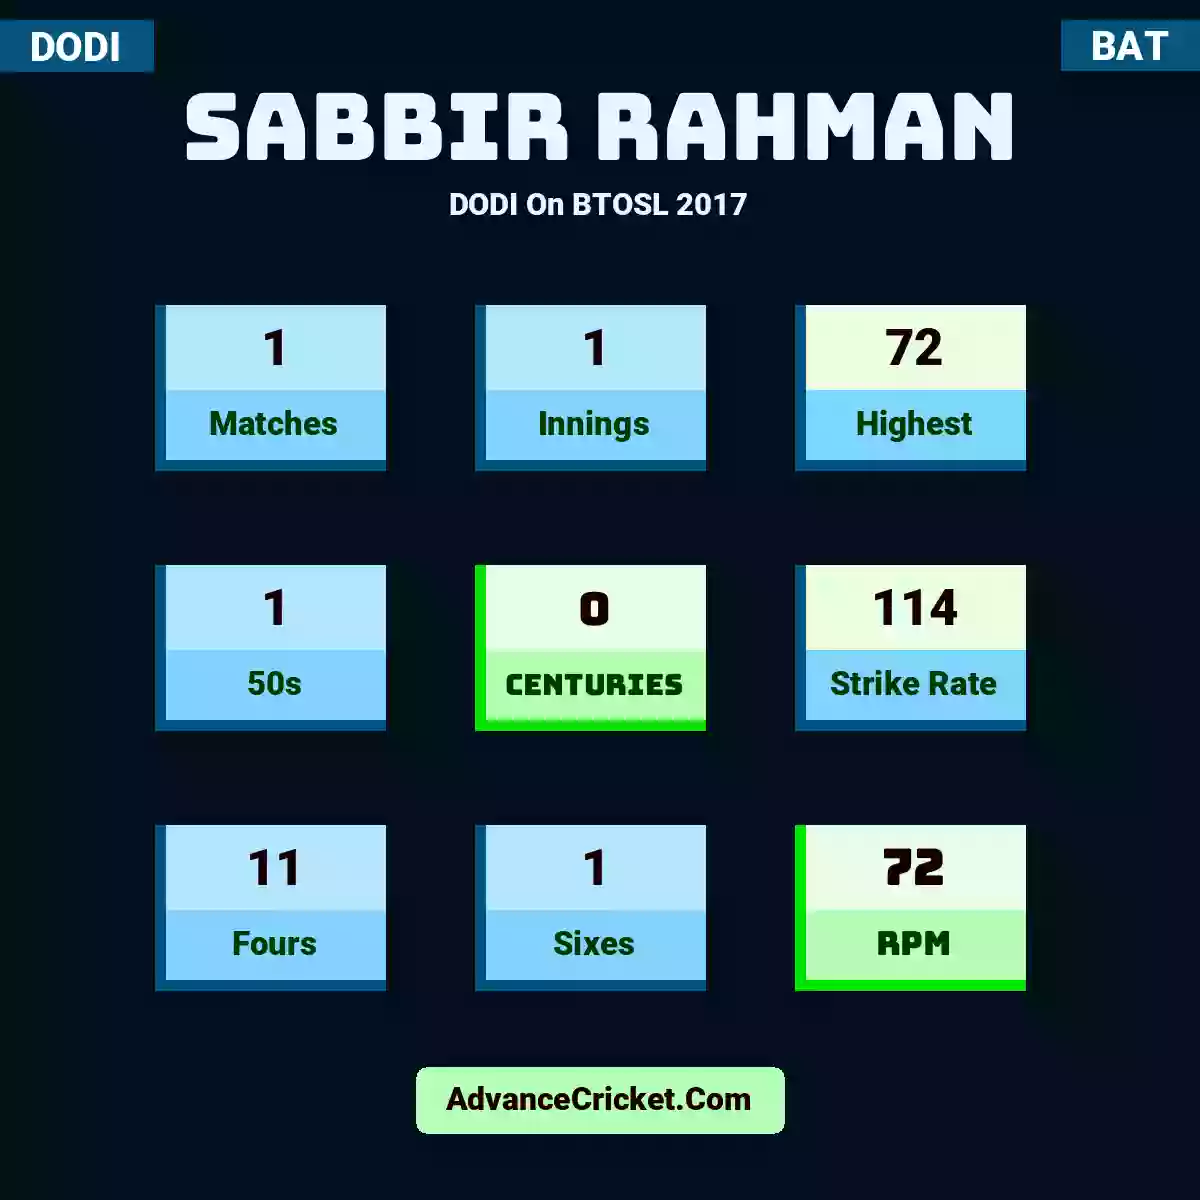 Sabbir Rahman DODI  On BTOSL 2017, Sabbir Rahman played 1 matches, scored 72 runs as highest, 1 half-centuries, and 0 centuries, with a strike rate of 114. S.Rahman hit 11 fours and 1 sixes, with an RPM of 72.